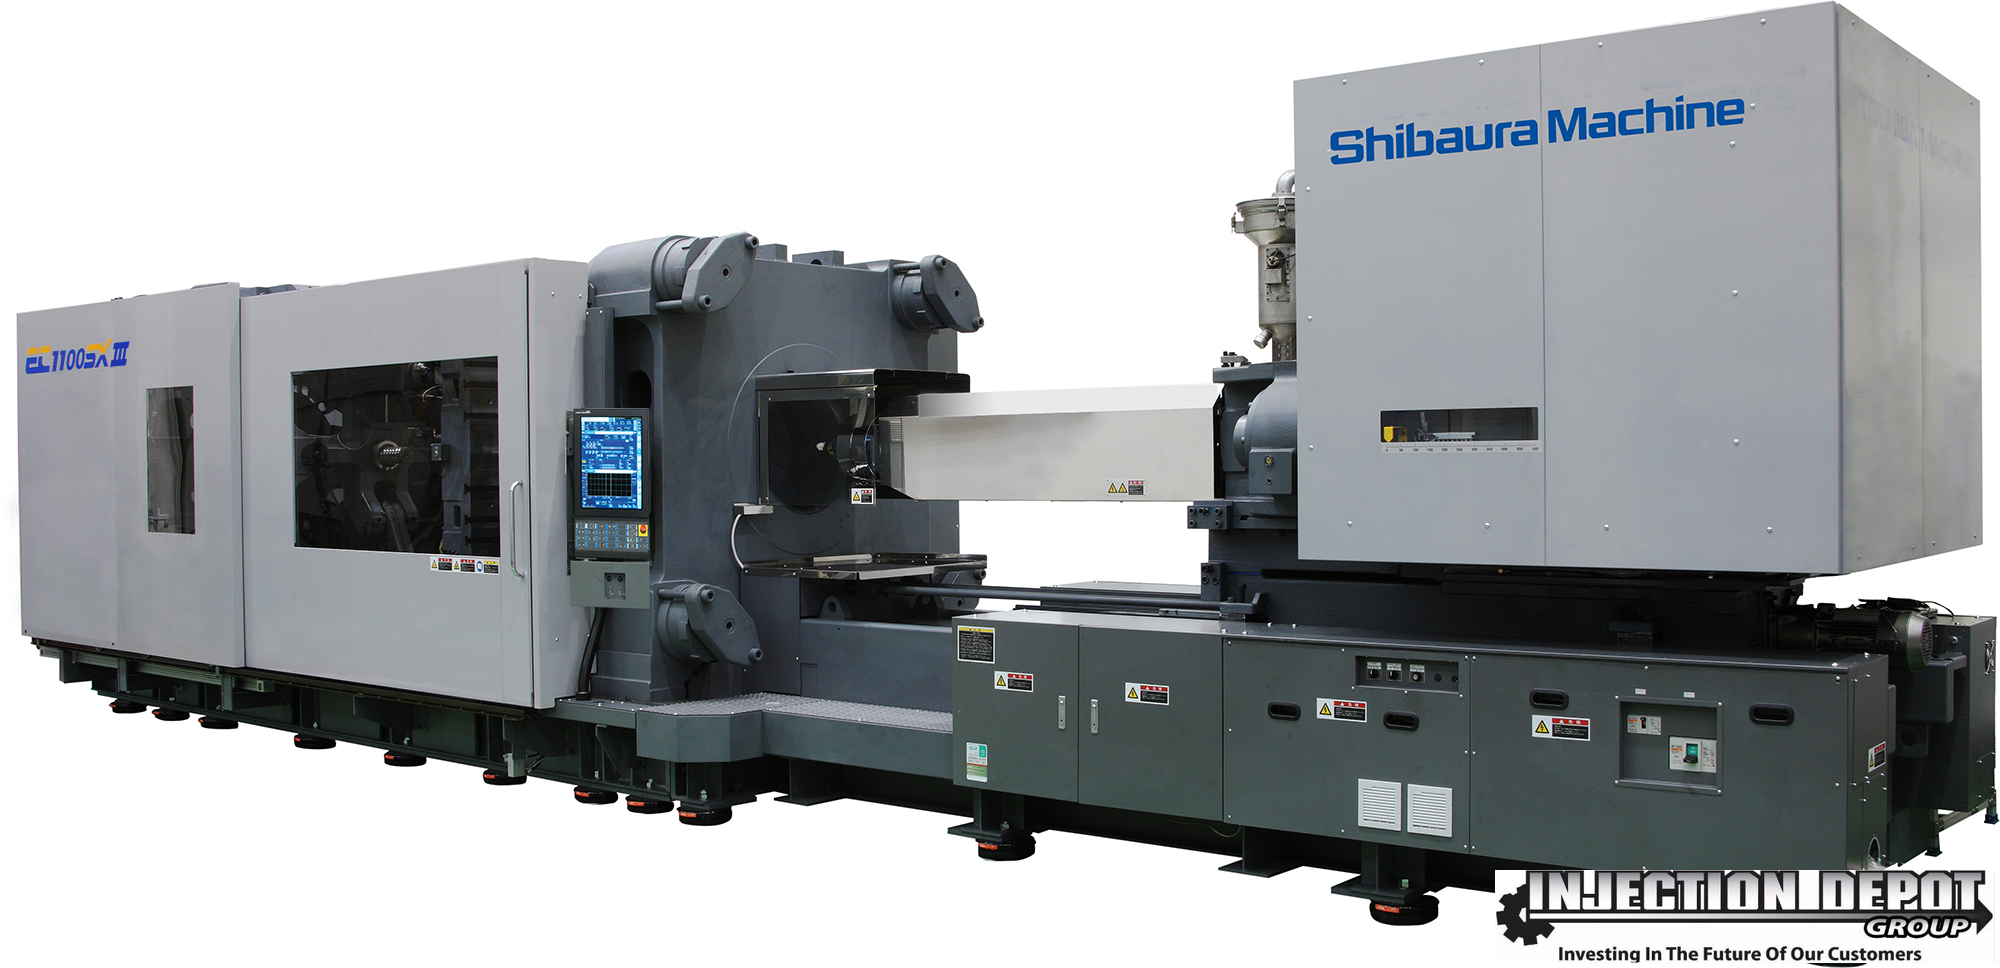 SHIBAURA MACHINE EC1100SXIIIV70-i61 B Horizontal Injection Moulding Machines | INJECTION DEPOT GROUP